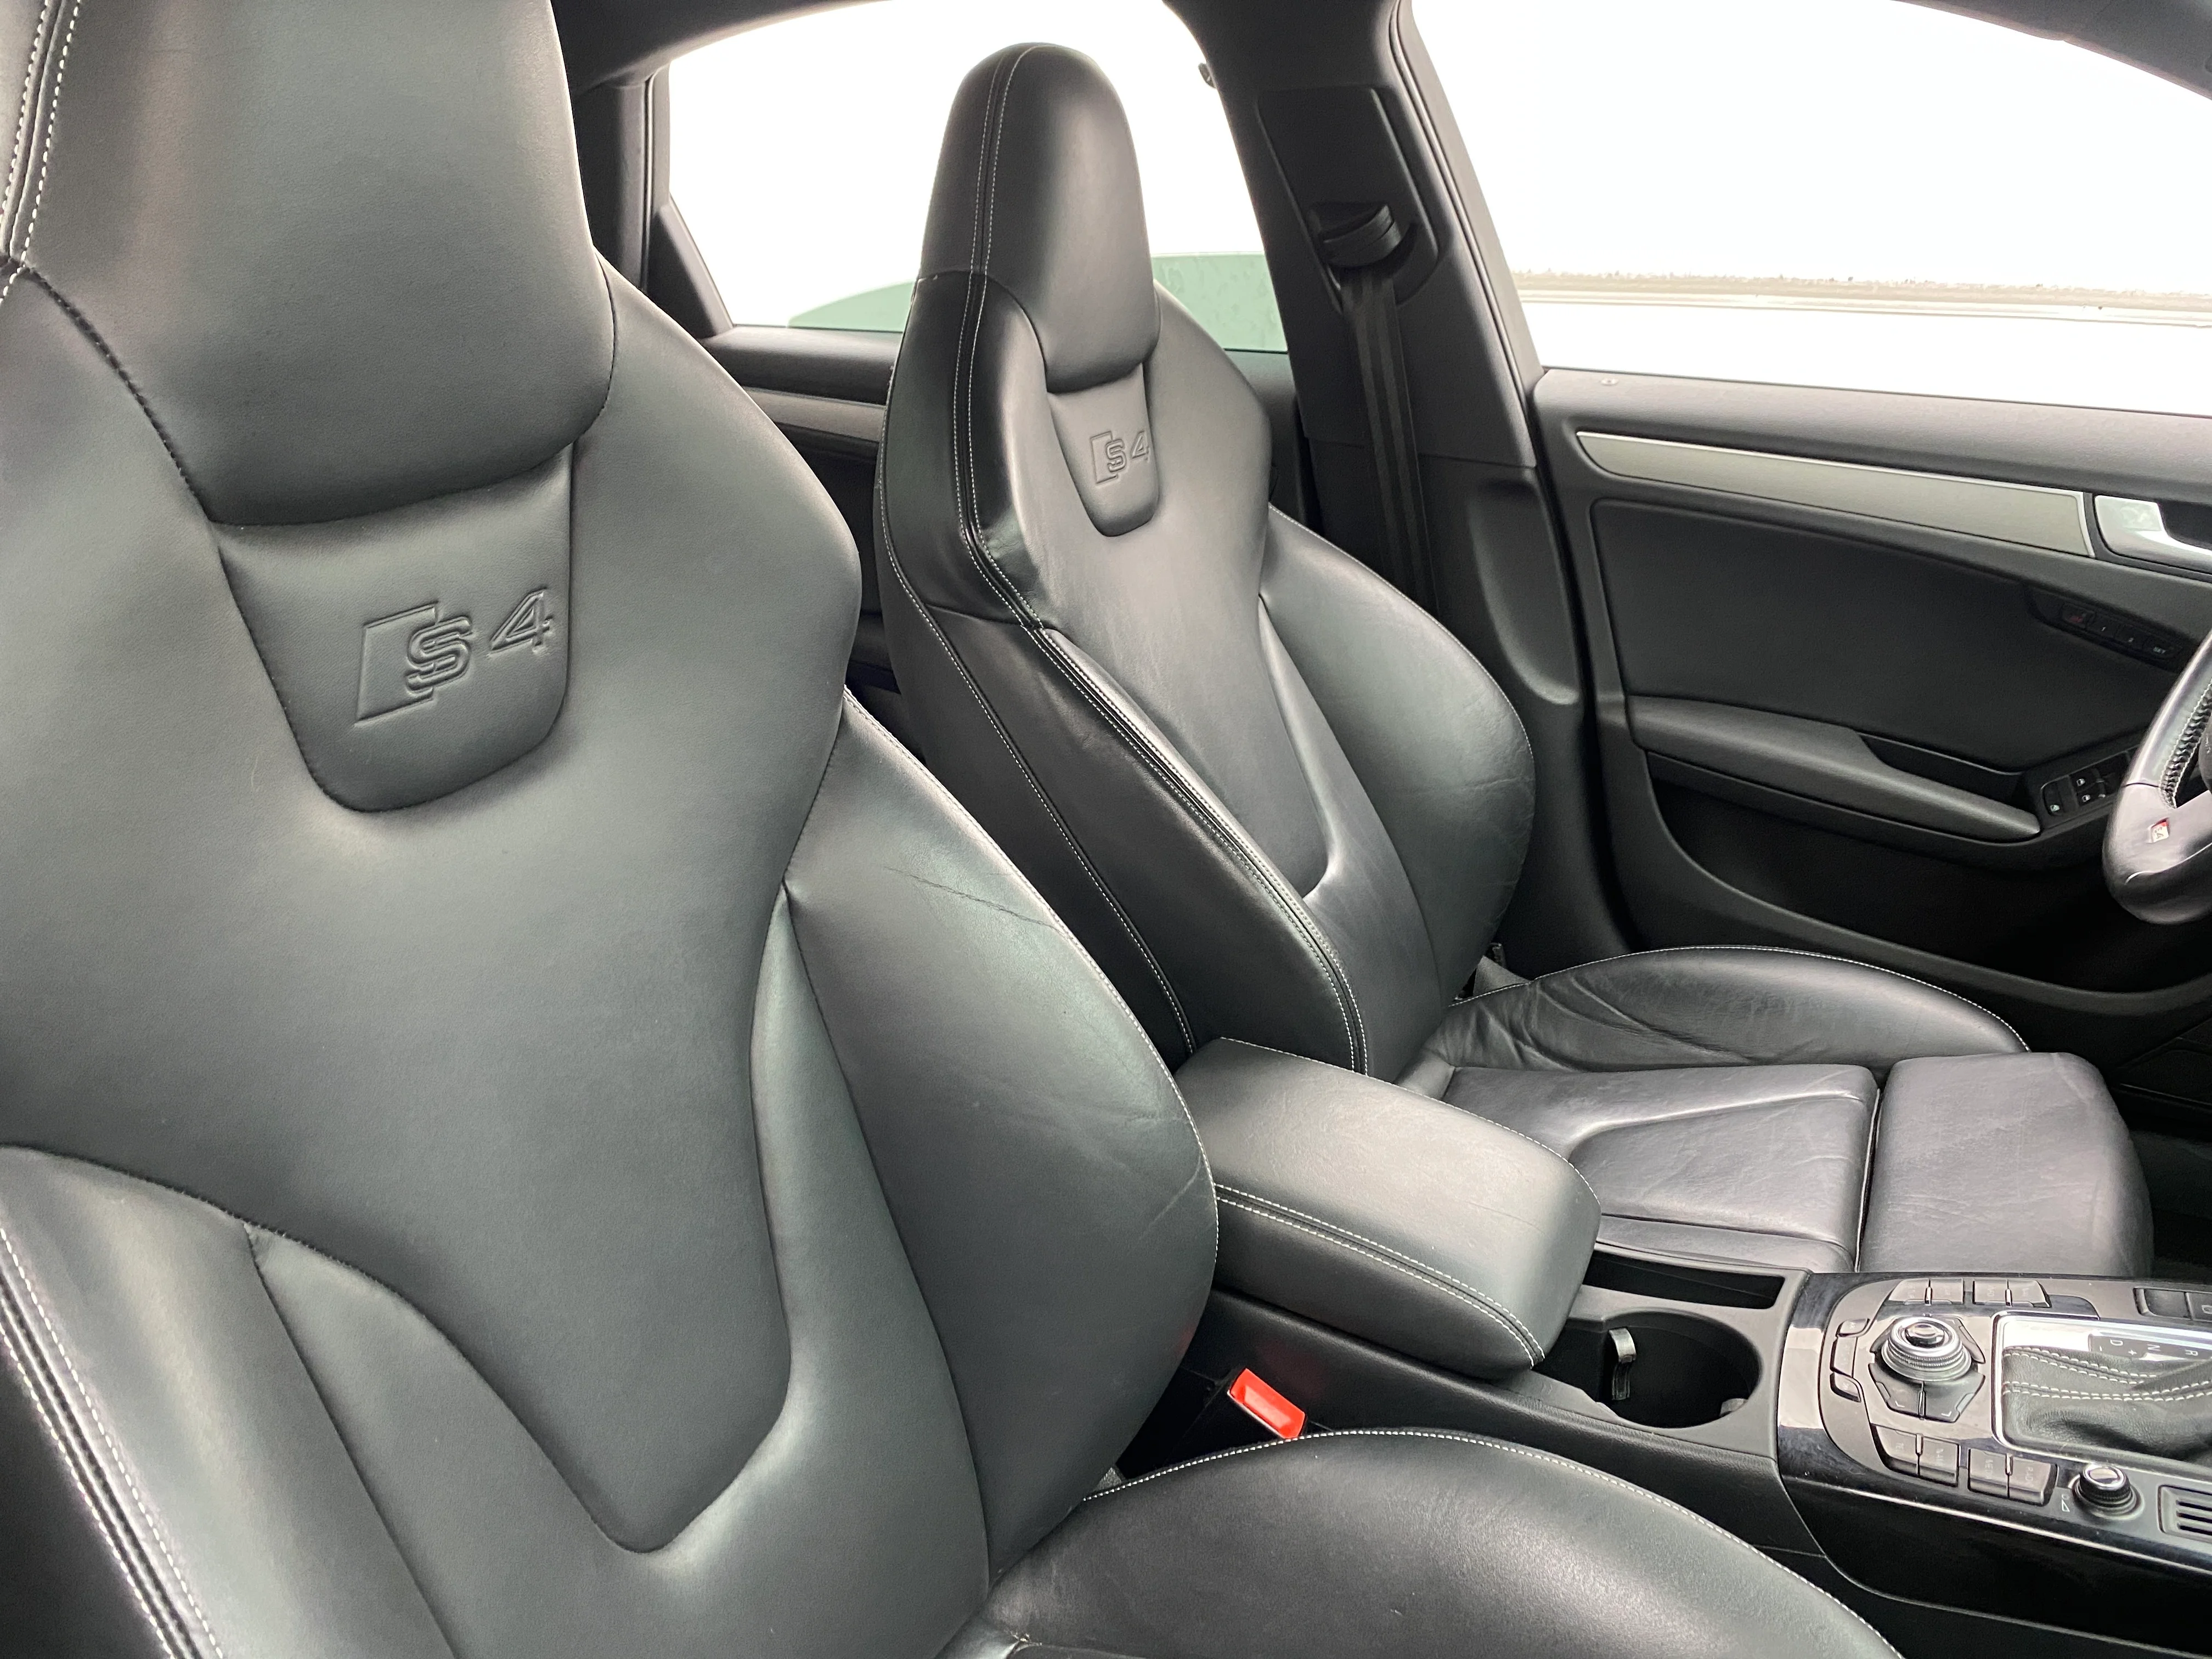 أودي S4 interior - Seats